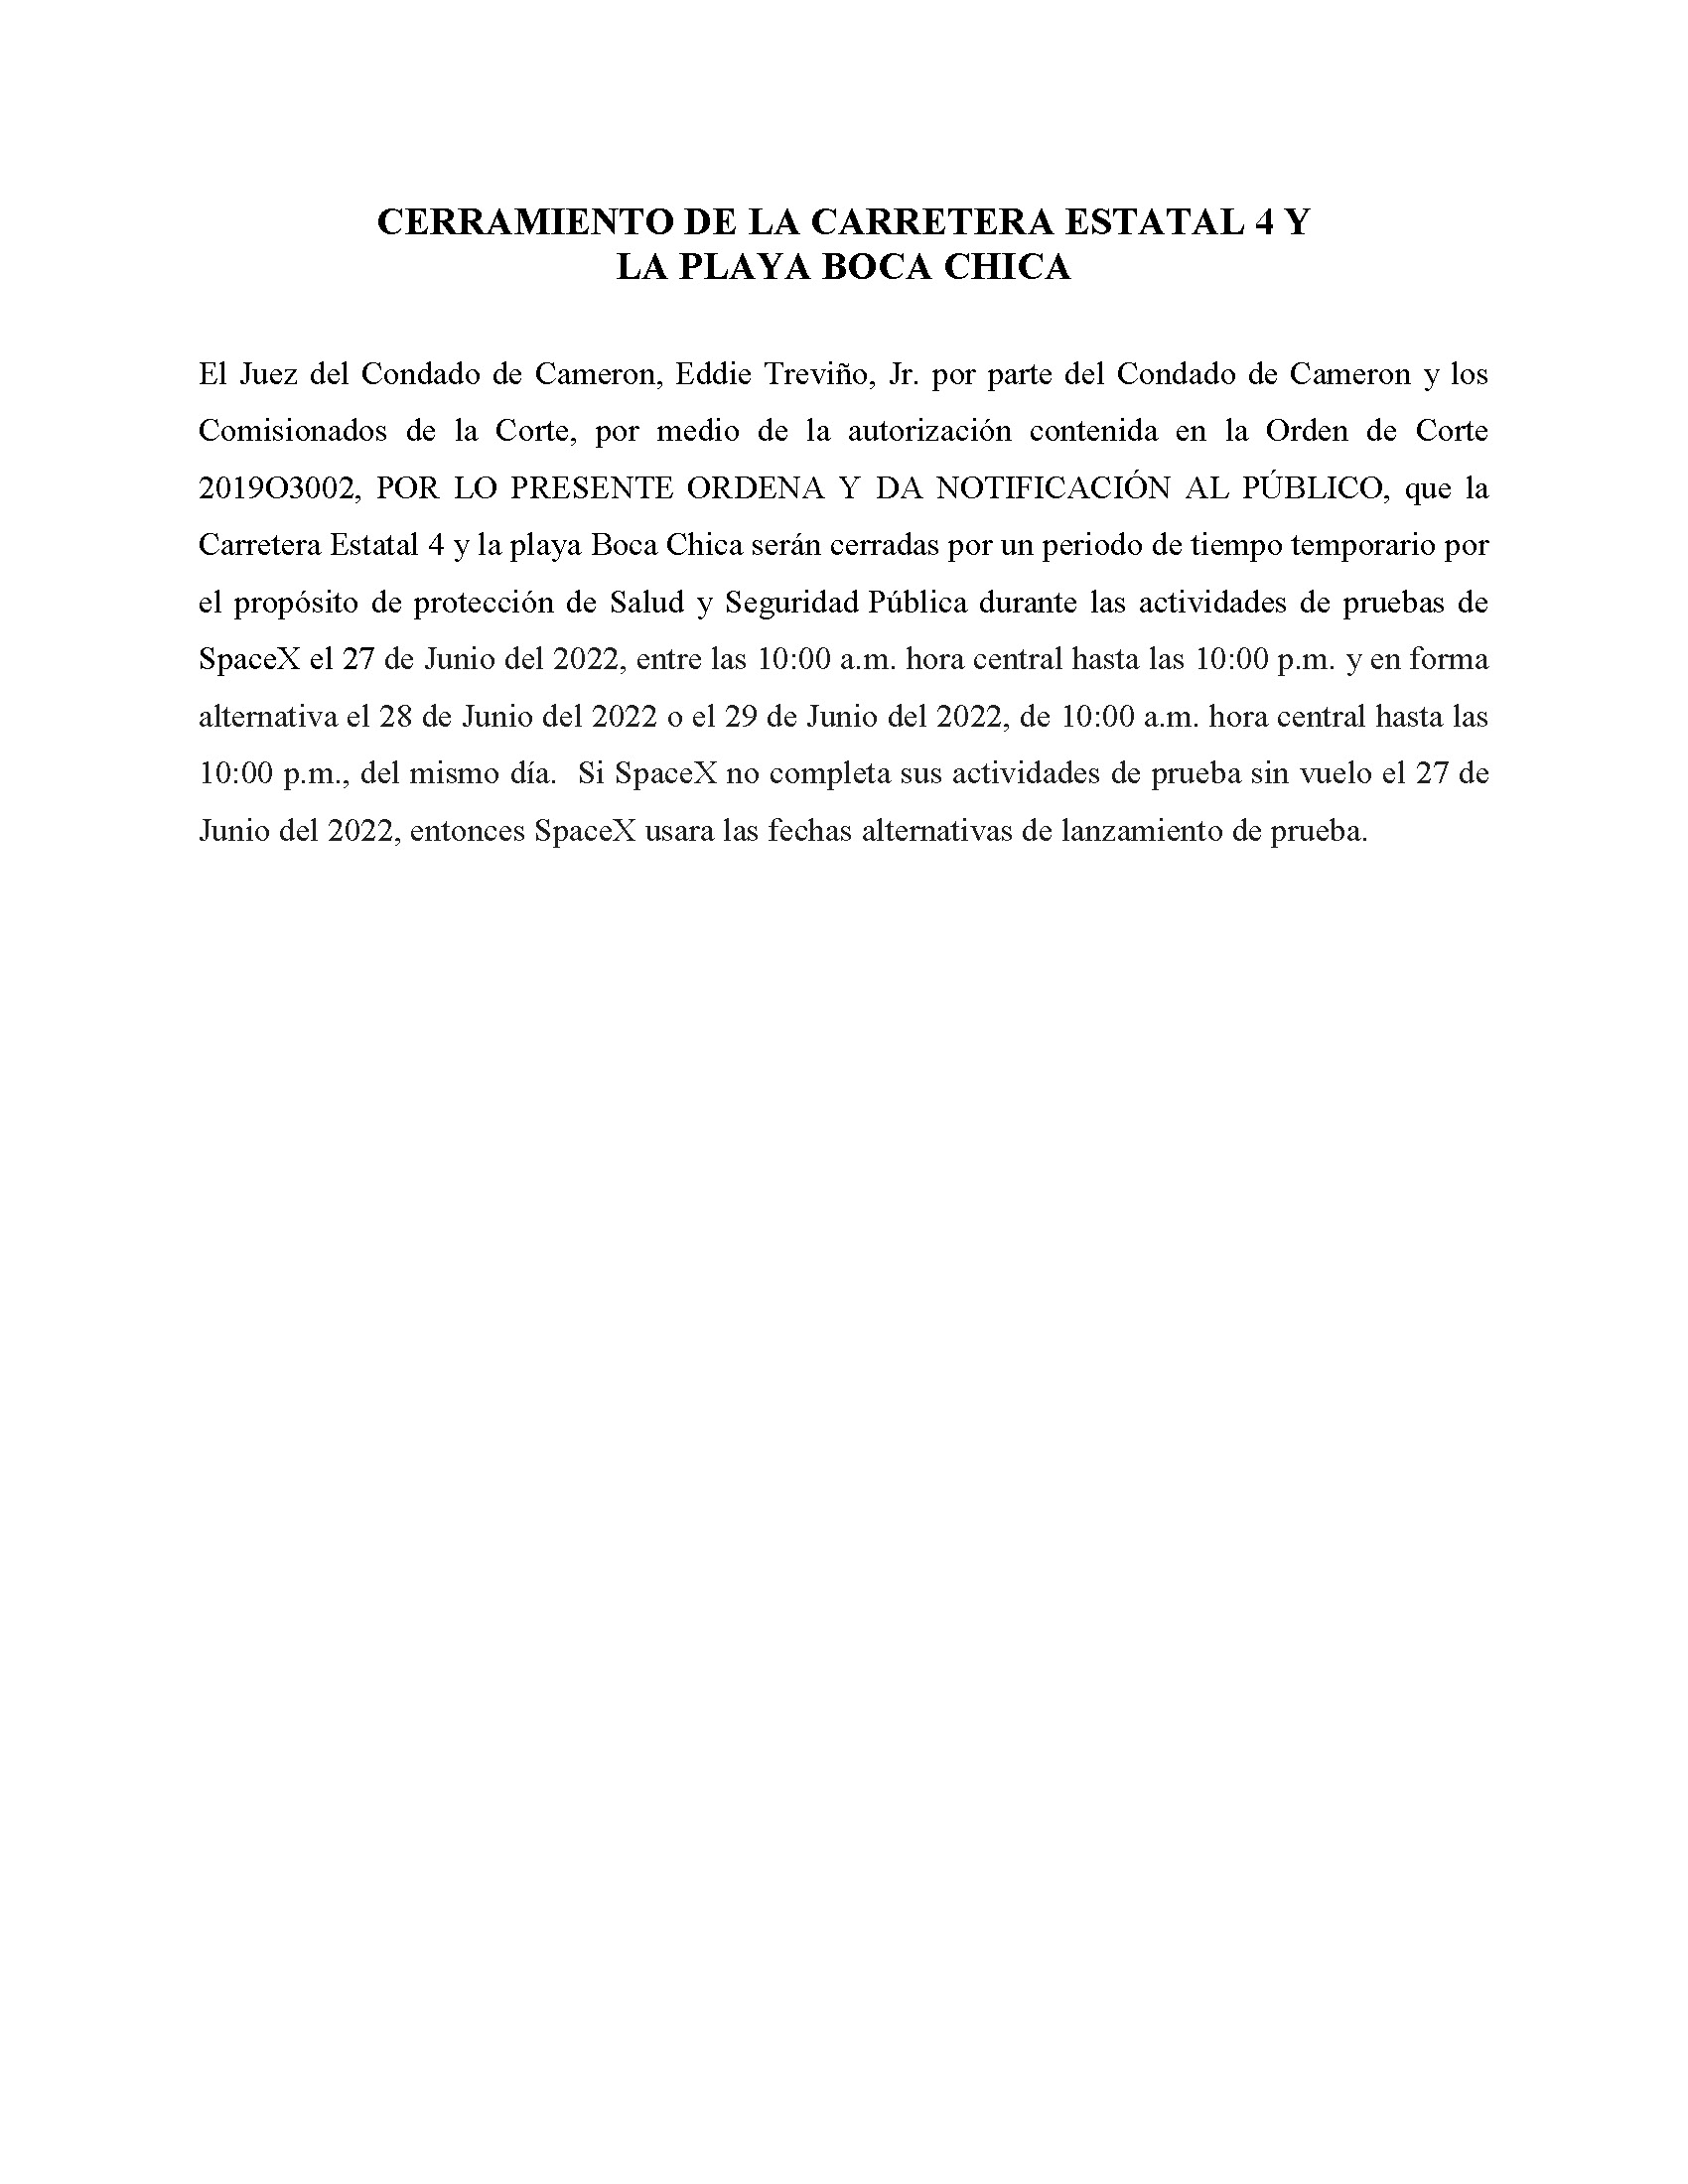 ORDER.CLOSURE OF HIGHWAY 4 Y LA PLAYA BOCA CHICA.SPANISH.06.27.2022